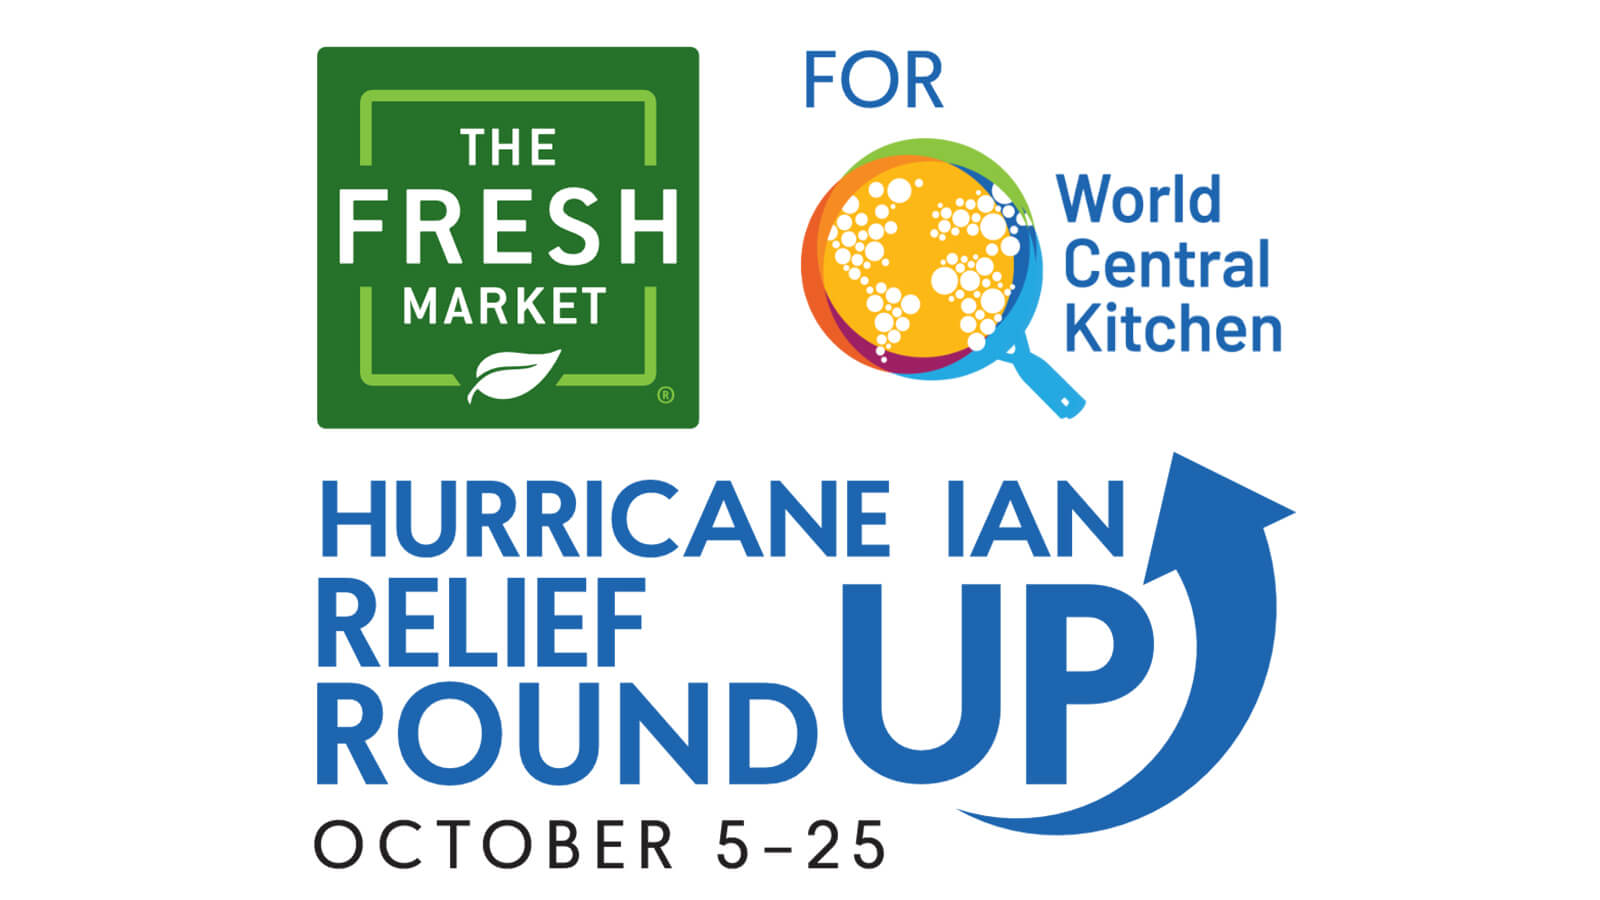 The Fresh Market For World Central Kitchen Logo